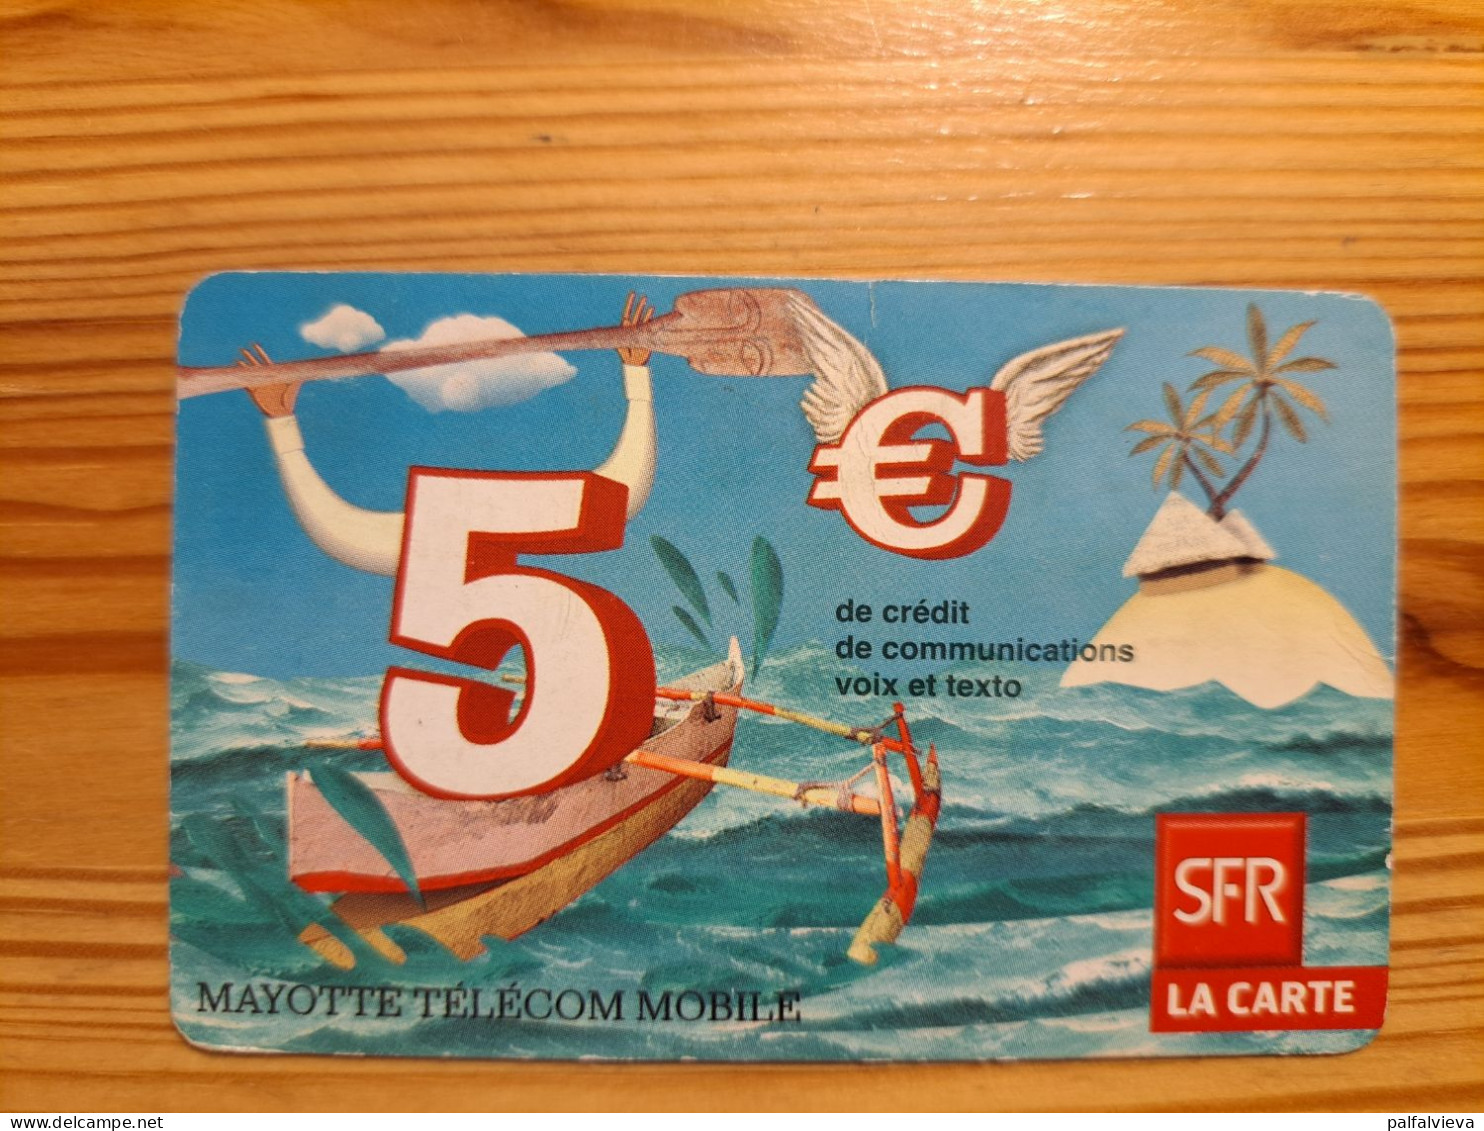 Prepaid Phonecard France, Mayotte, SFR - Mobicartes